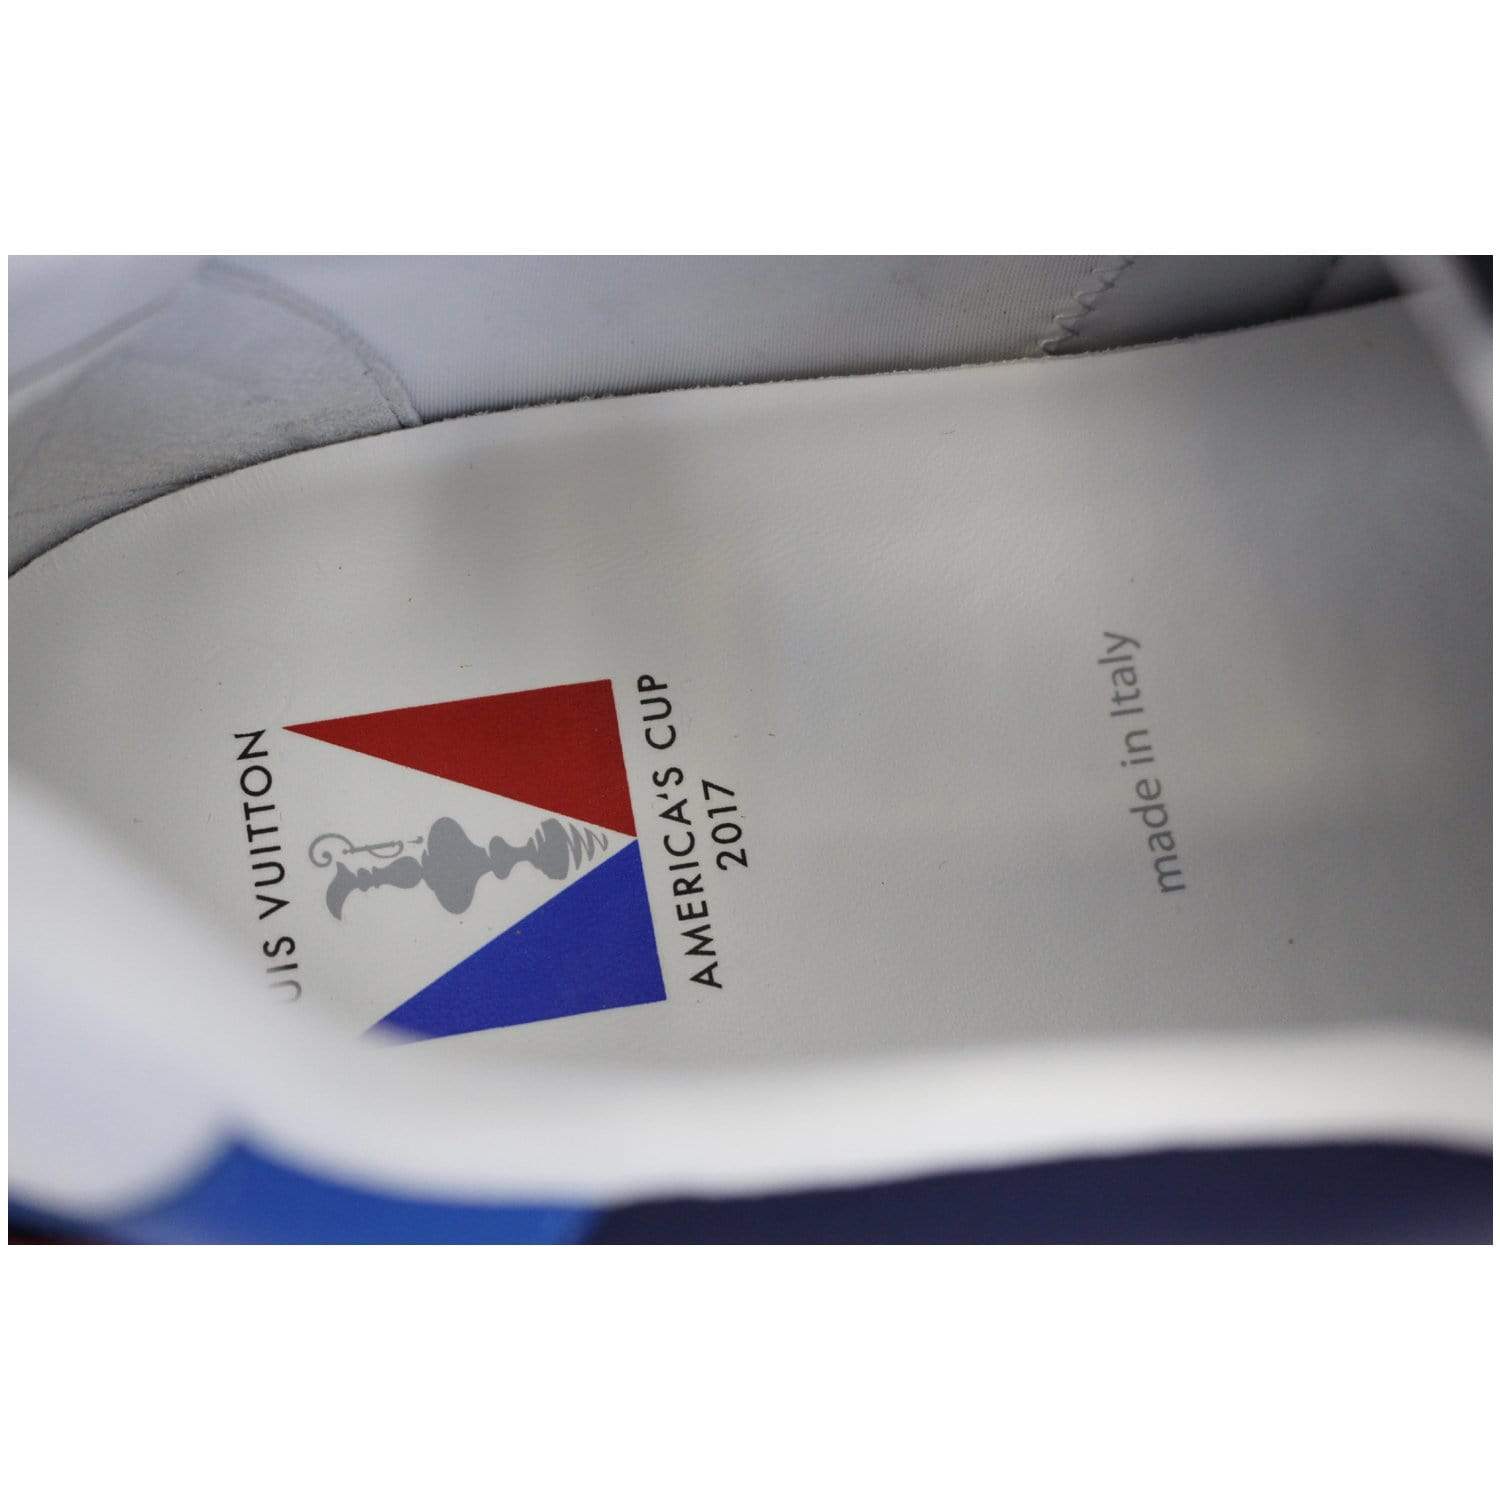 Louis Vuitton Louis Vuitton 2017 America's Cup America z cup men's Regatta  Sneakers shoes limitation : Real Yahoo auction salling